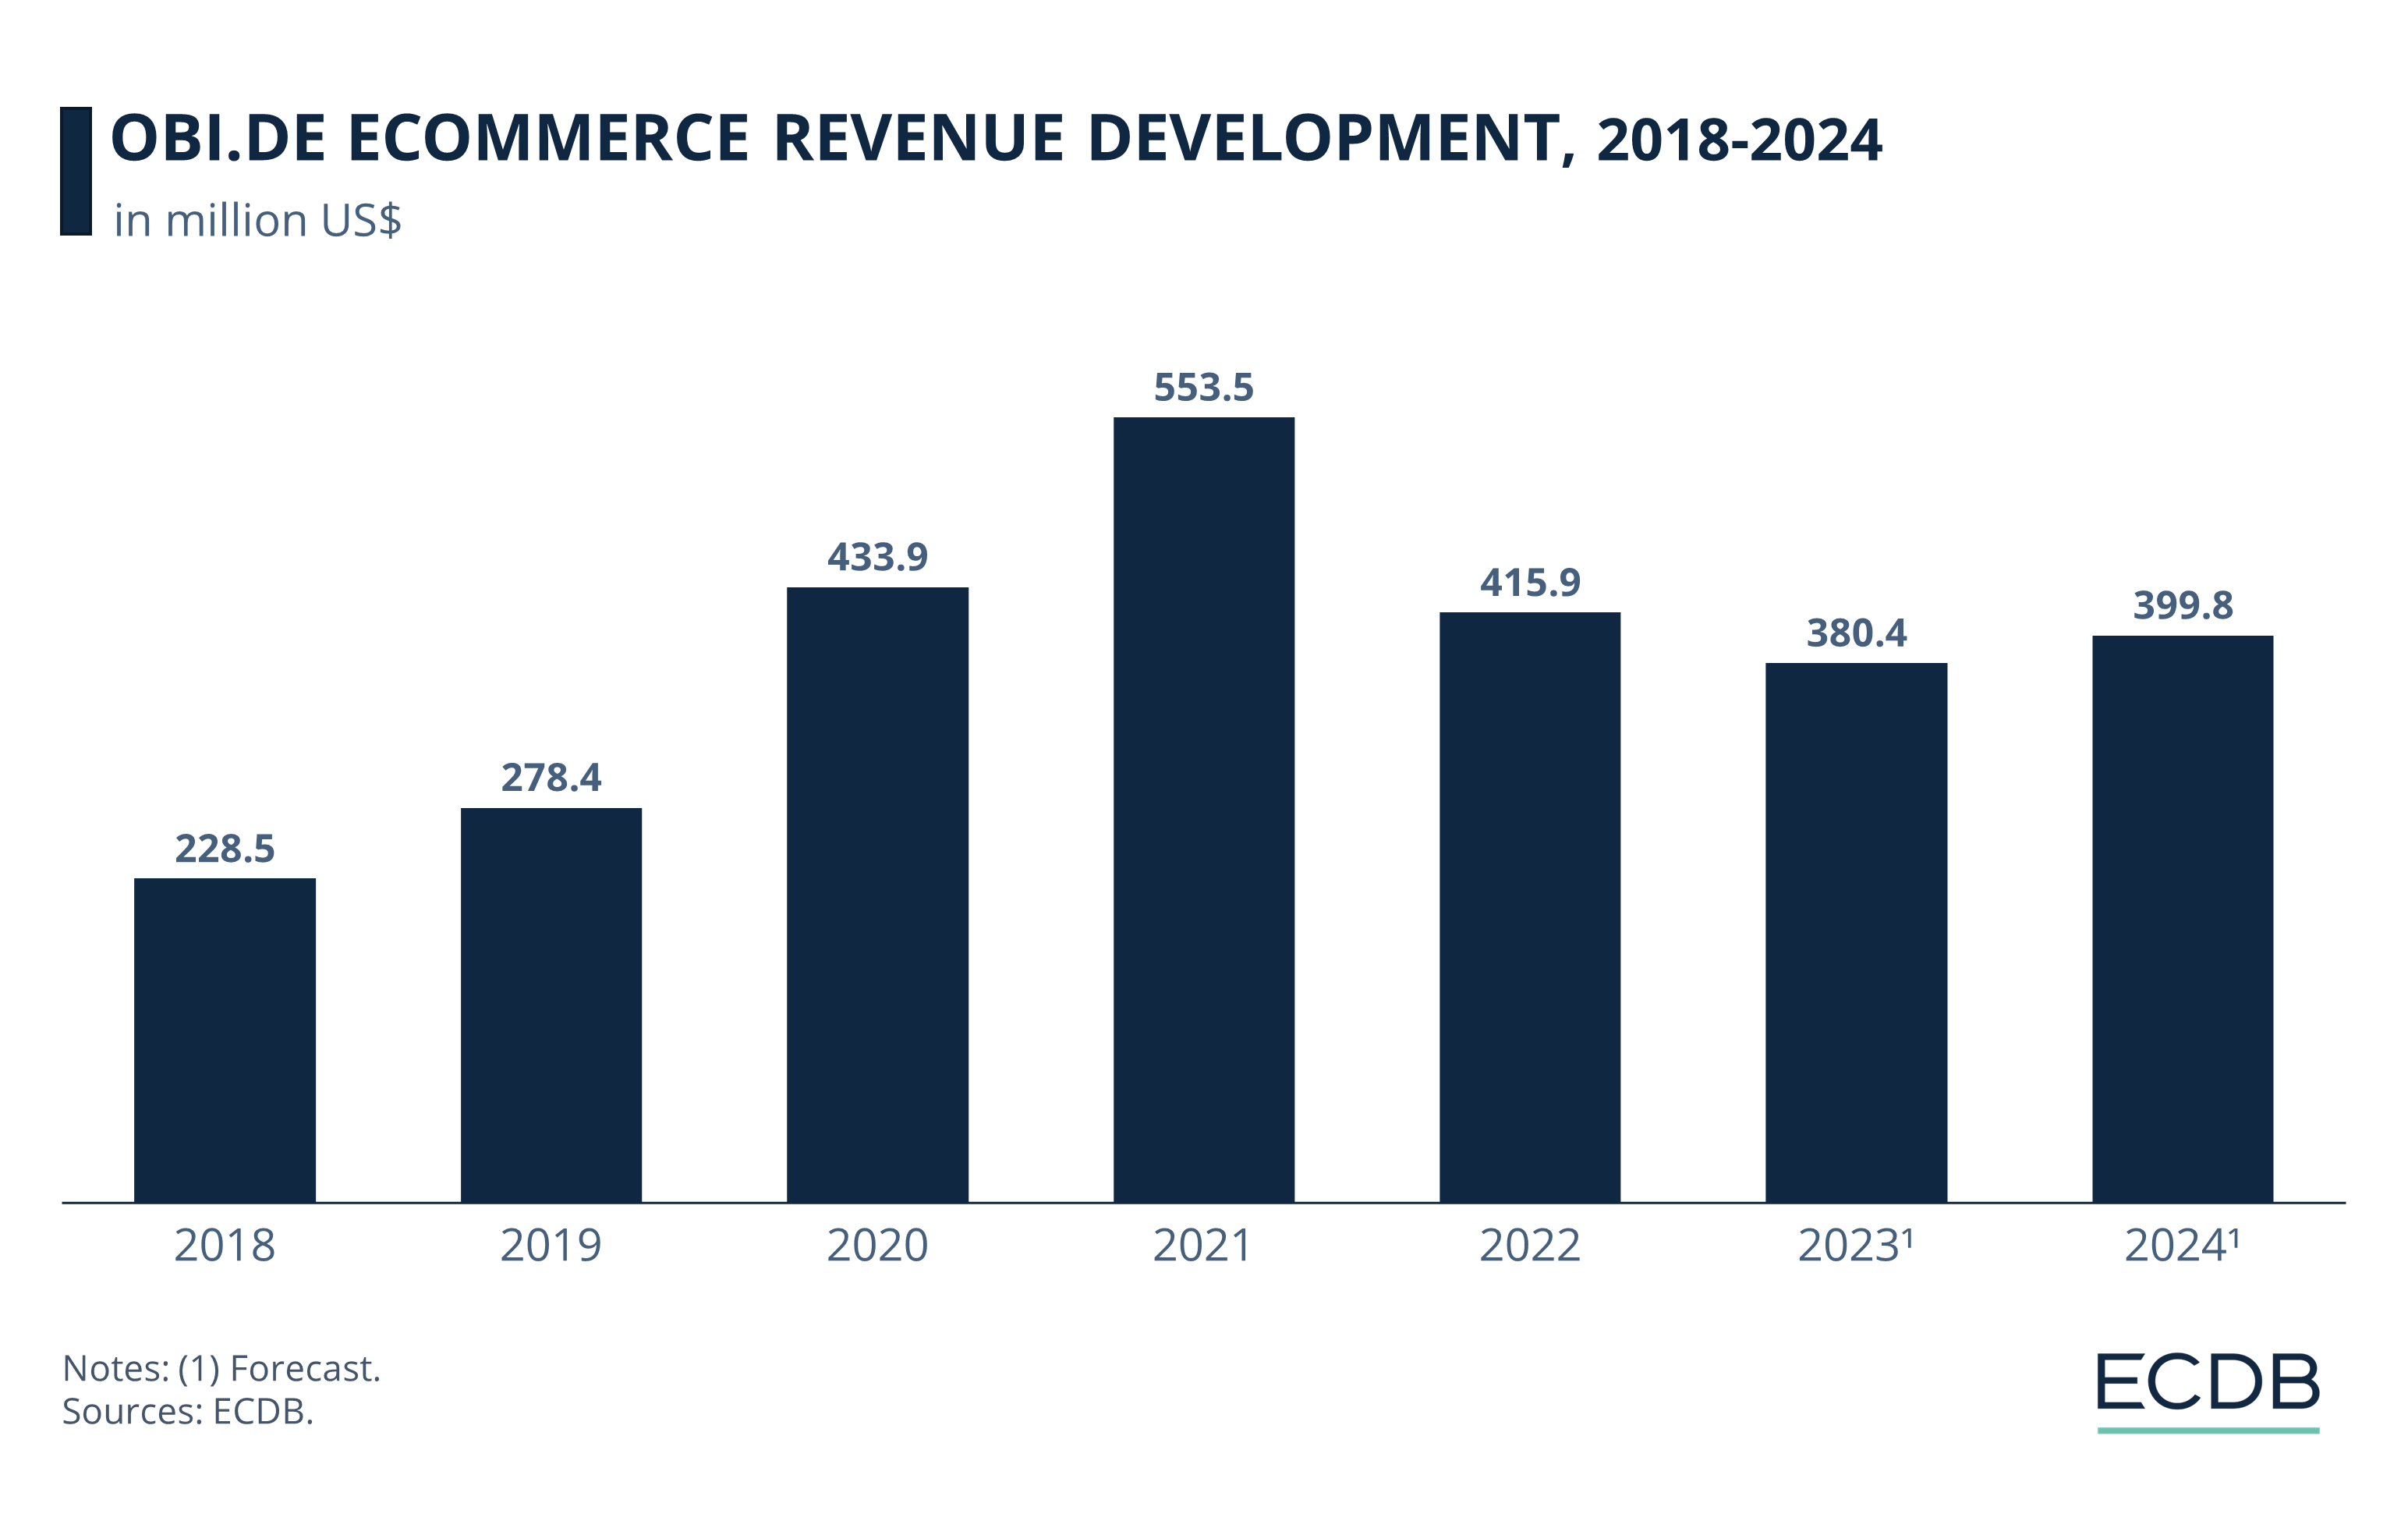 Obi.de eCommerce Revenue Development, 2018-2024